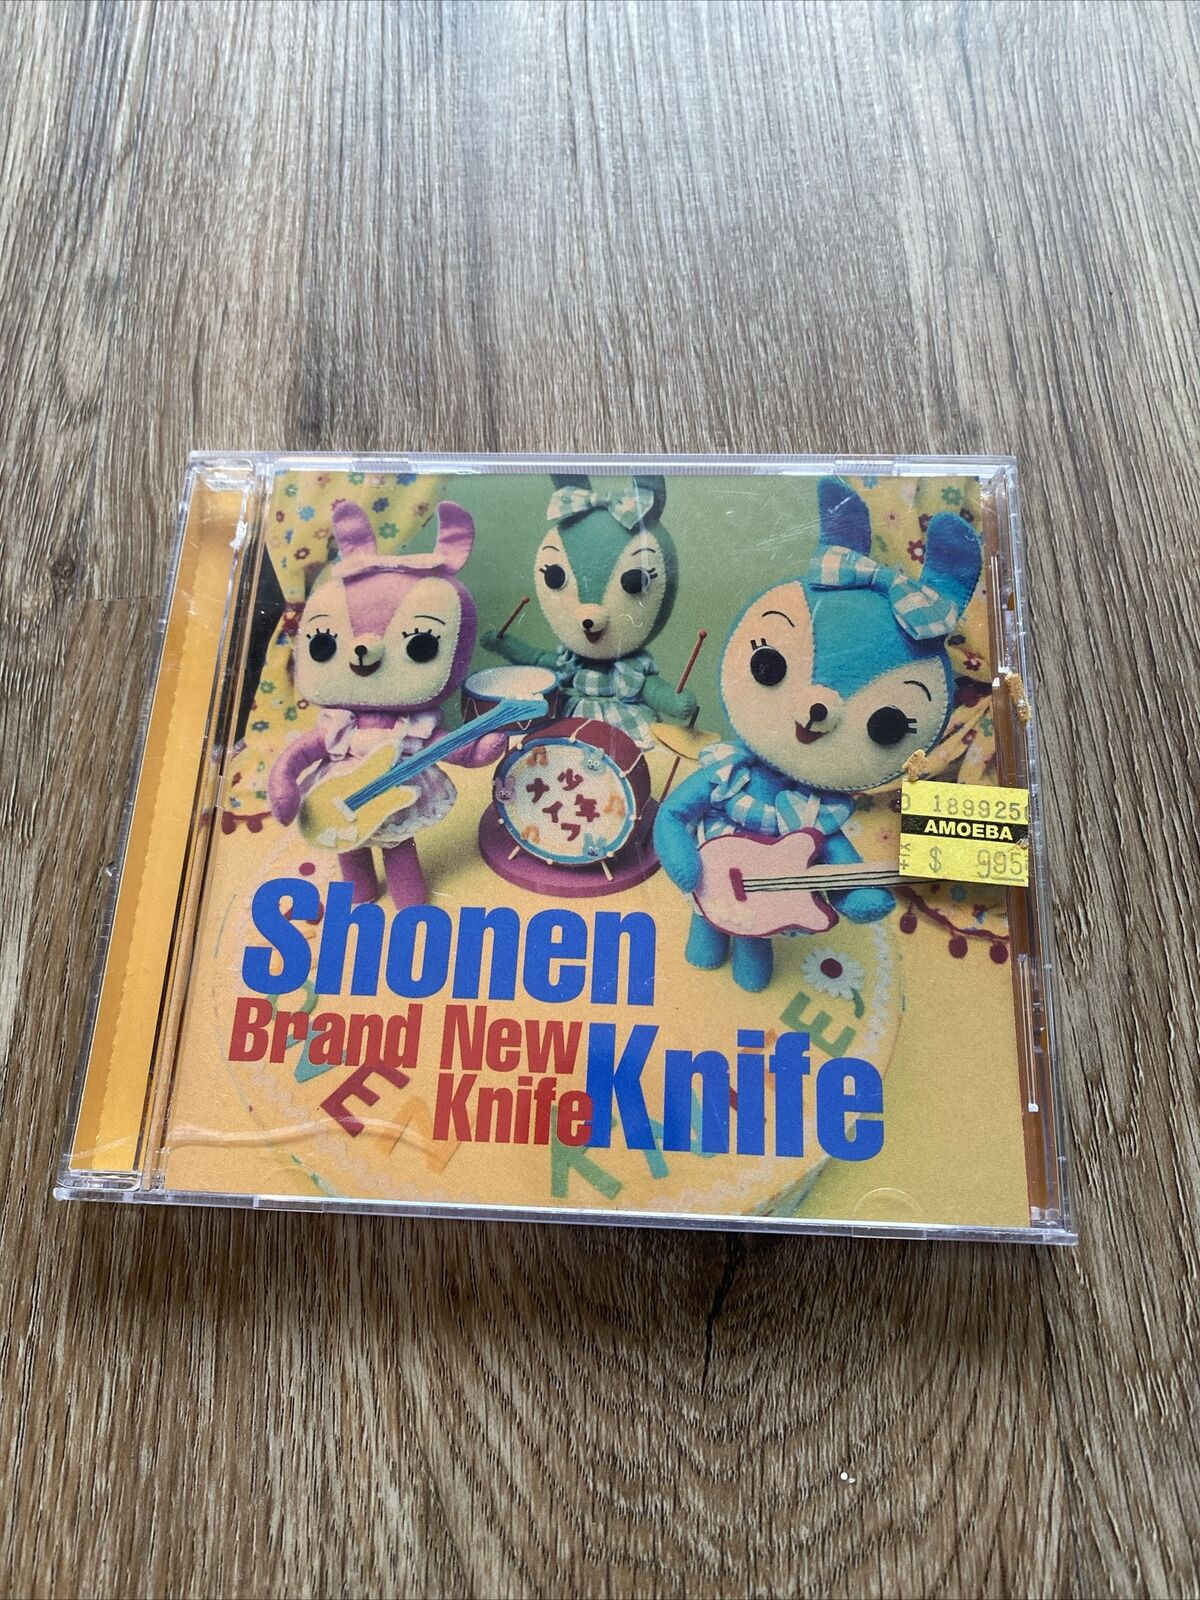 Brand New Knife by Shonen Knife (CD, Mar-1997, Big Deal Records)